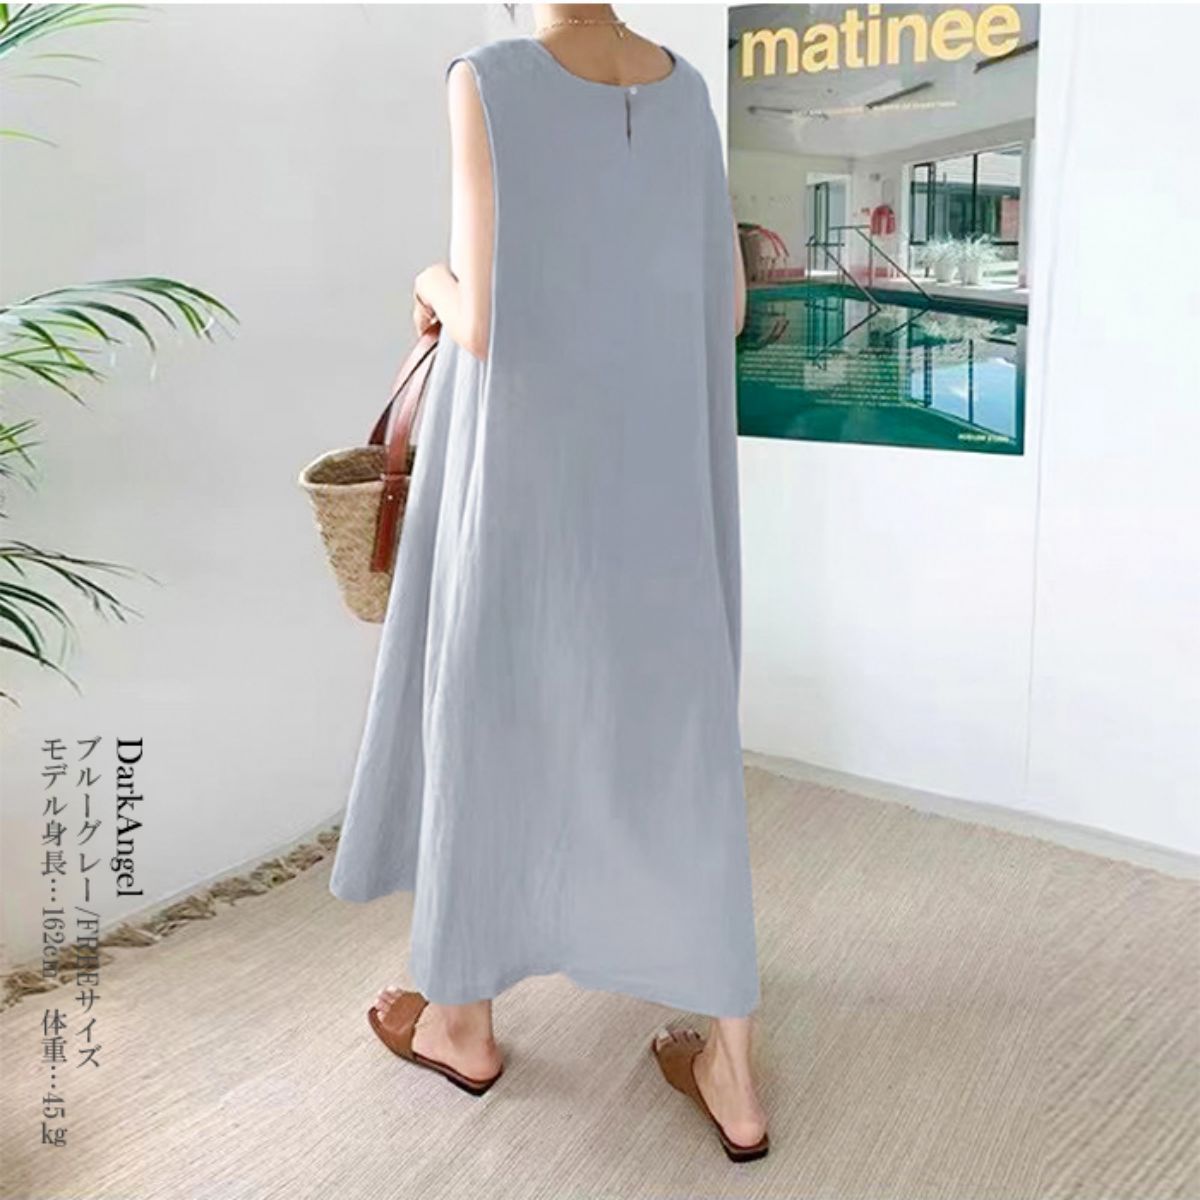 Casual Linen Summer Long Cozy Dresses